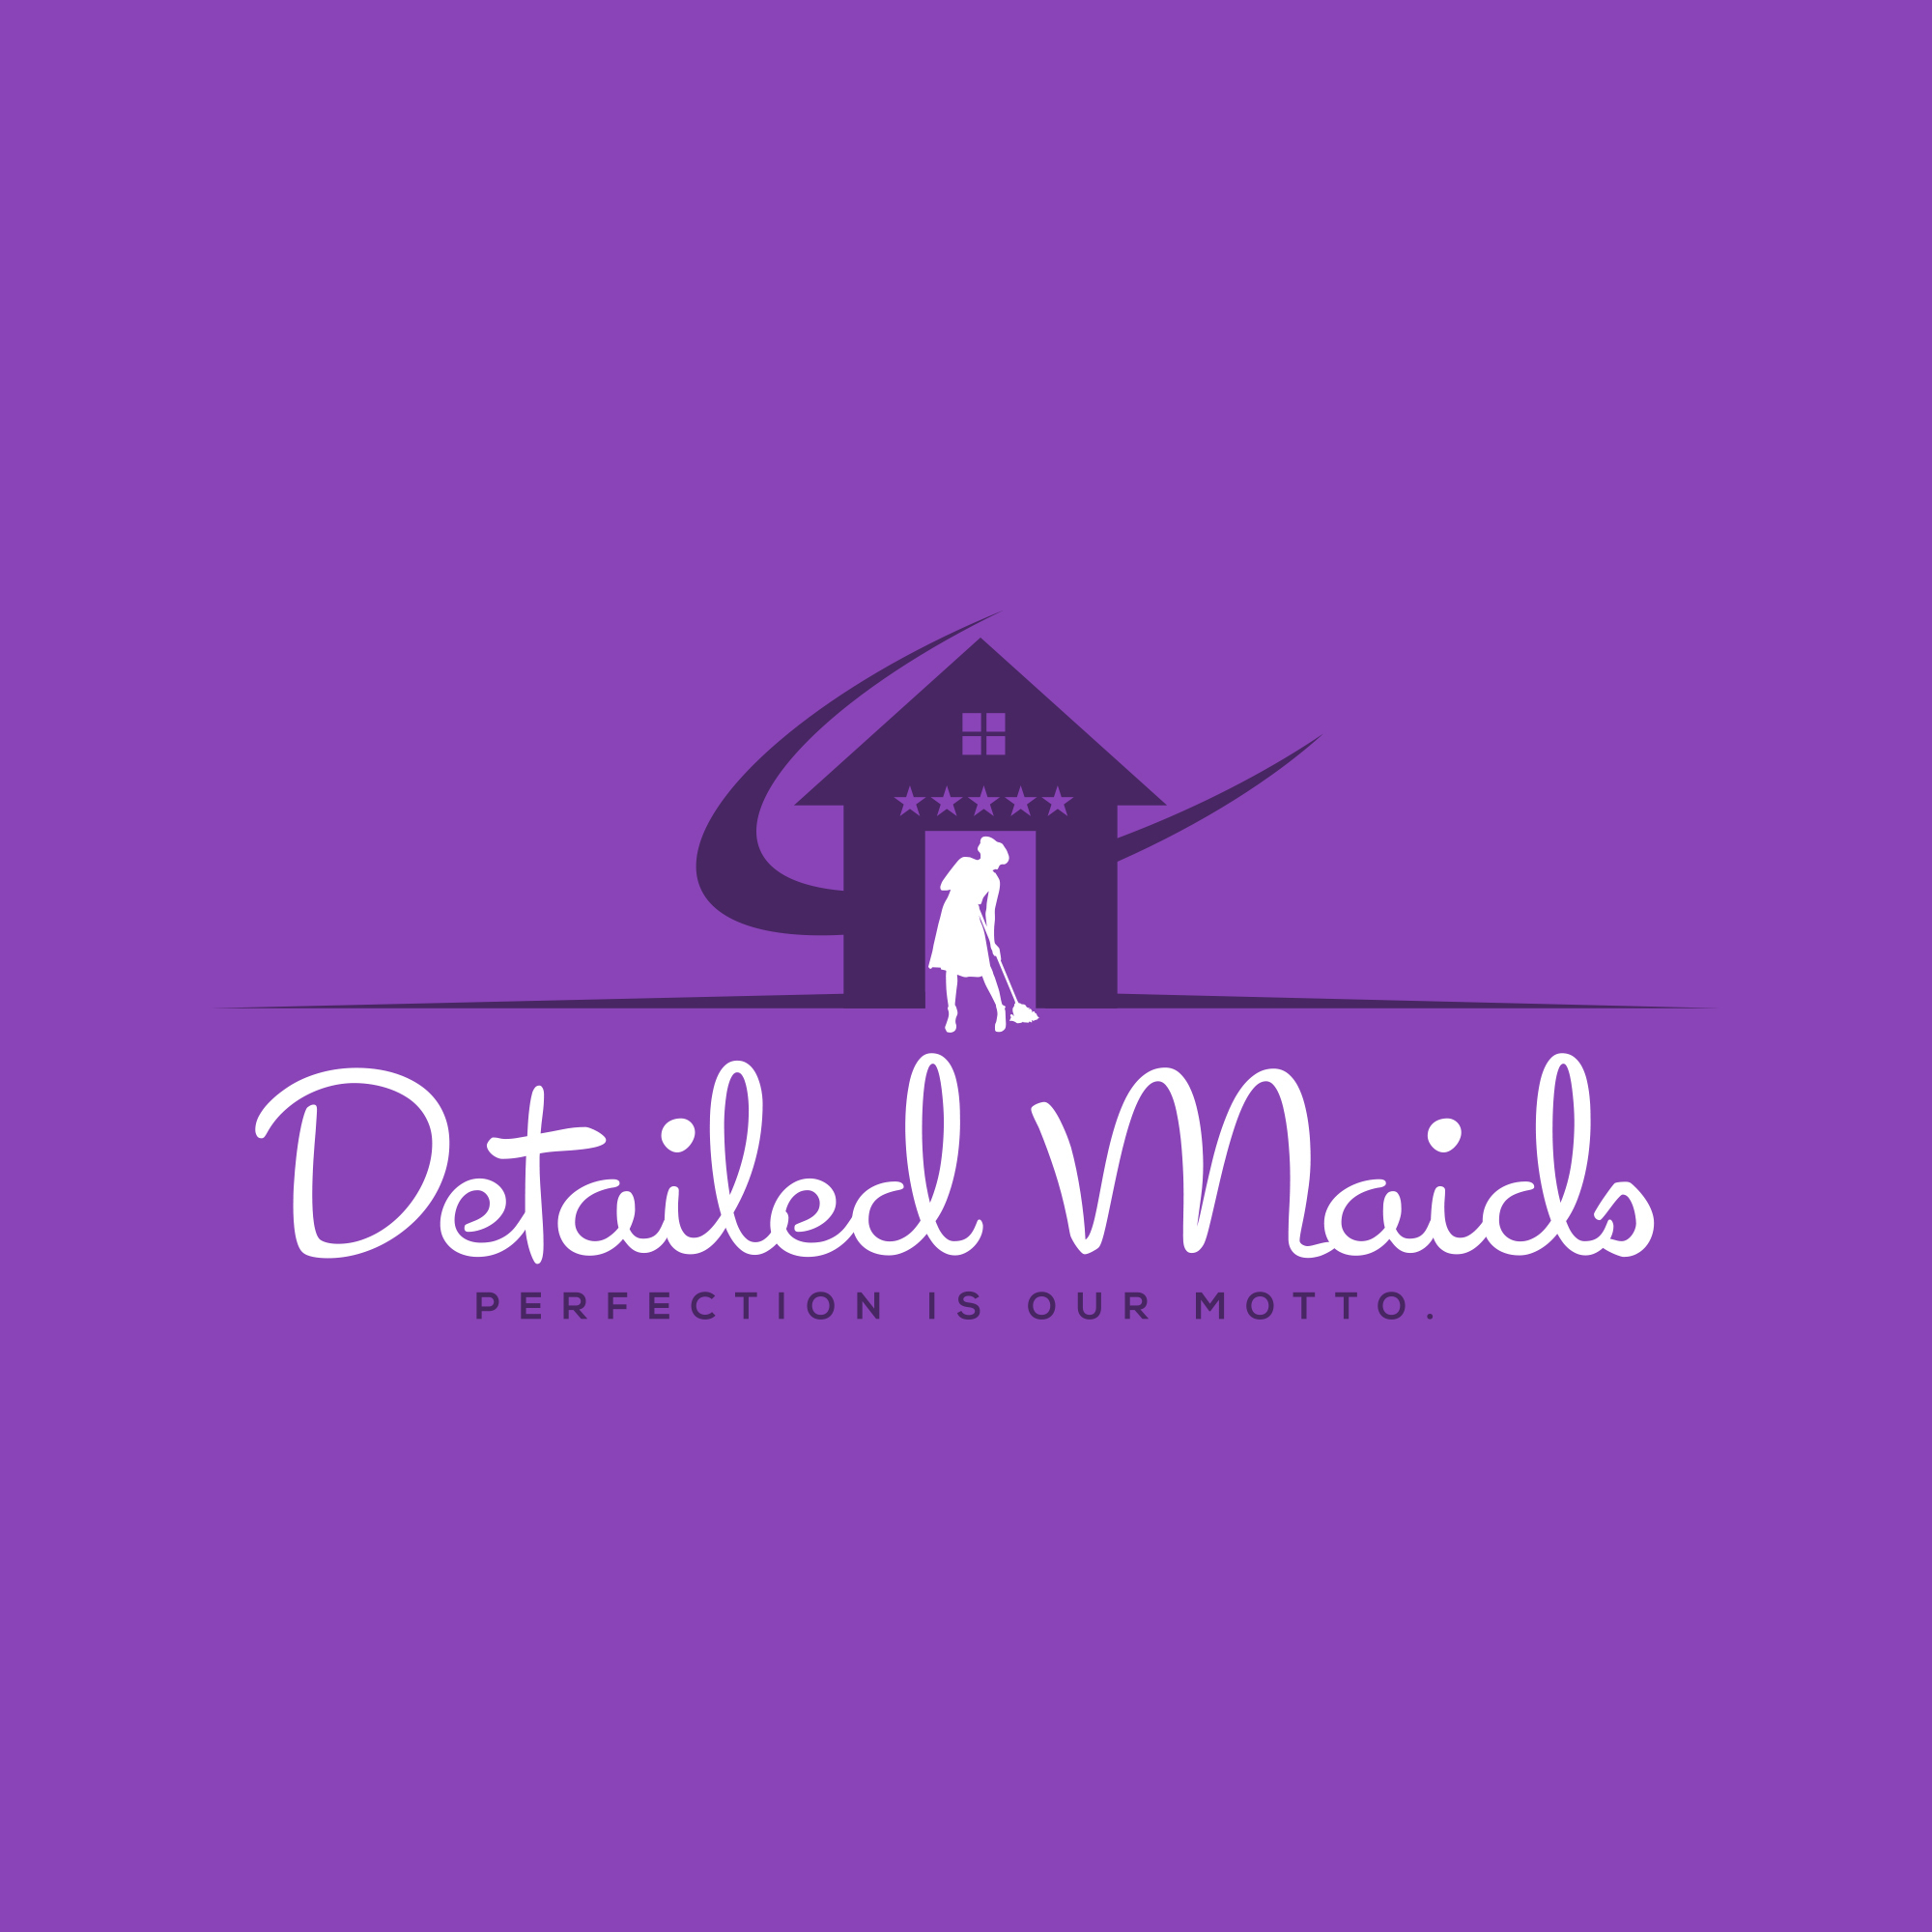 Detailed Maids's logo